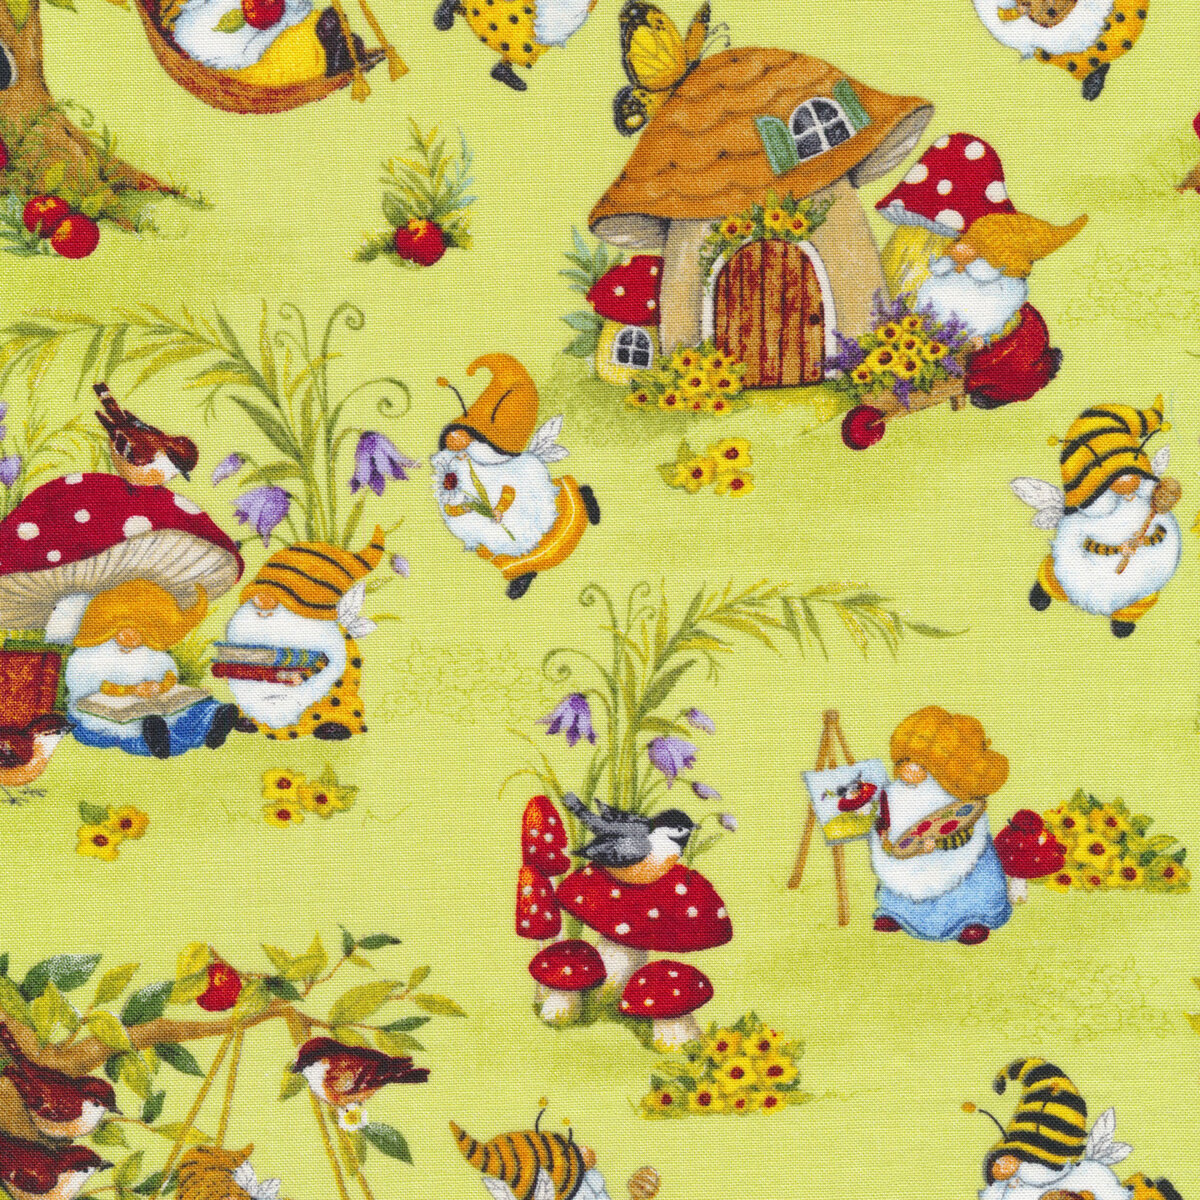 Strawberry Delight Novelty Cotton Fabric by Novelty Prints